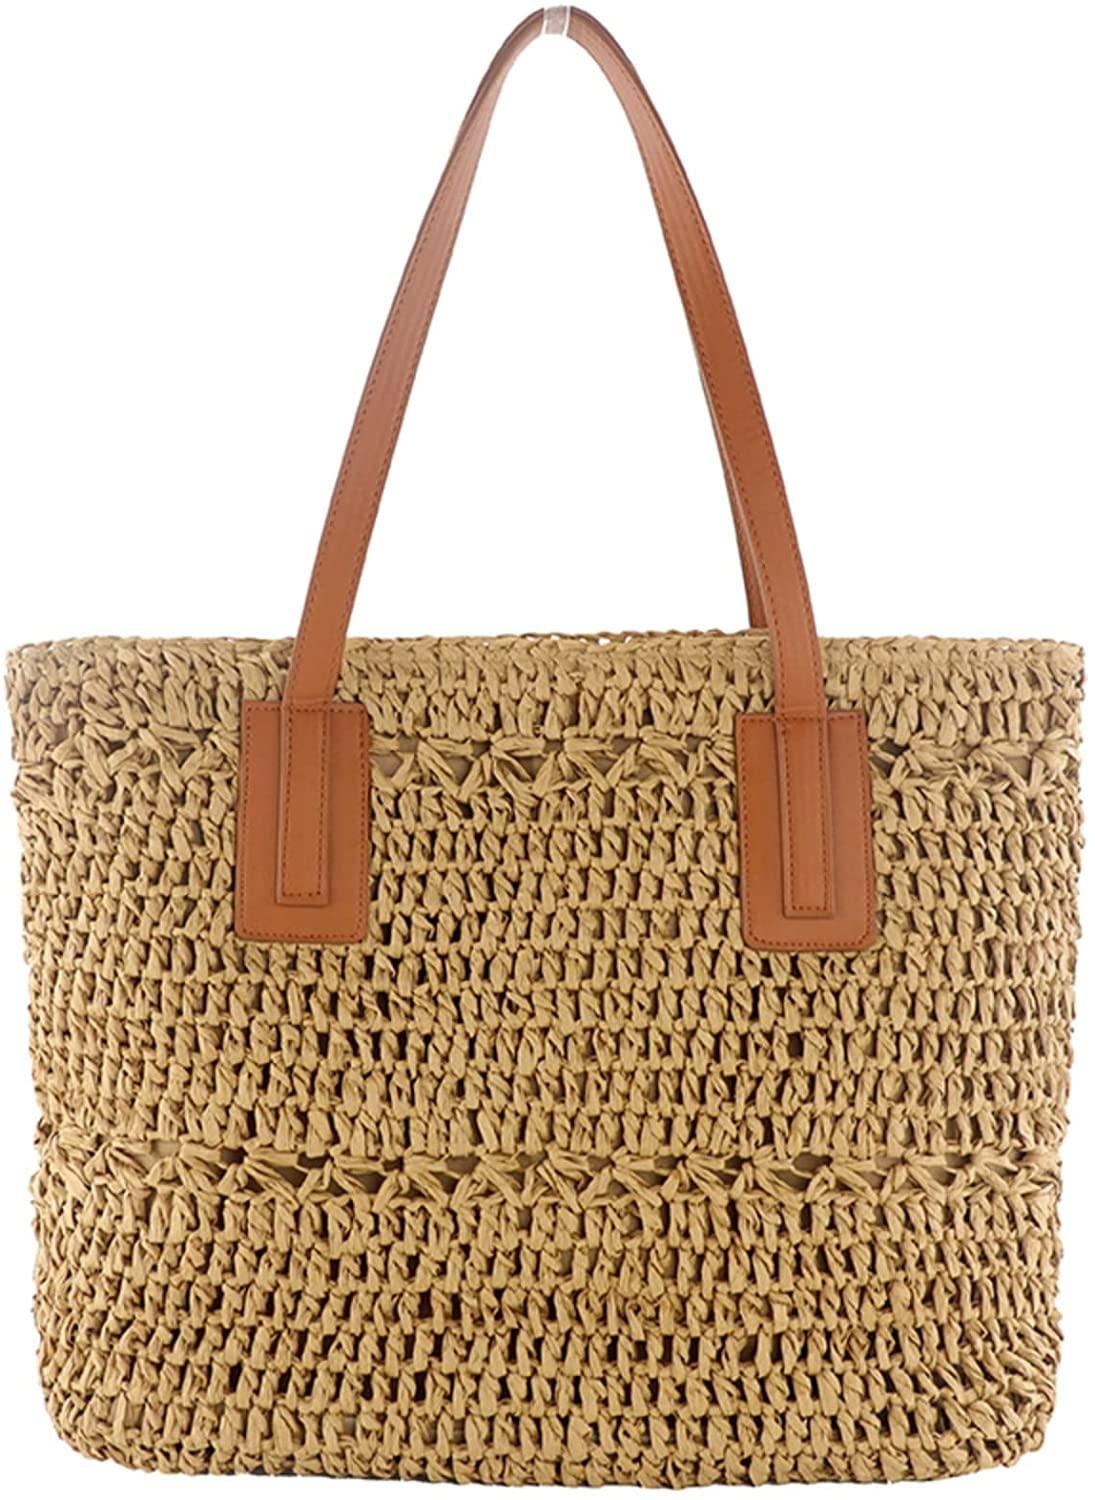  ZYYMMNN Weave Square Tote Bag Summer Straw Bag Women's Designer Handbag  Beach Travel Bag Shoulder Messenger Bag 24X11X17CM-1 : Clothing, Shoes &  Jewelry